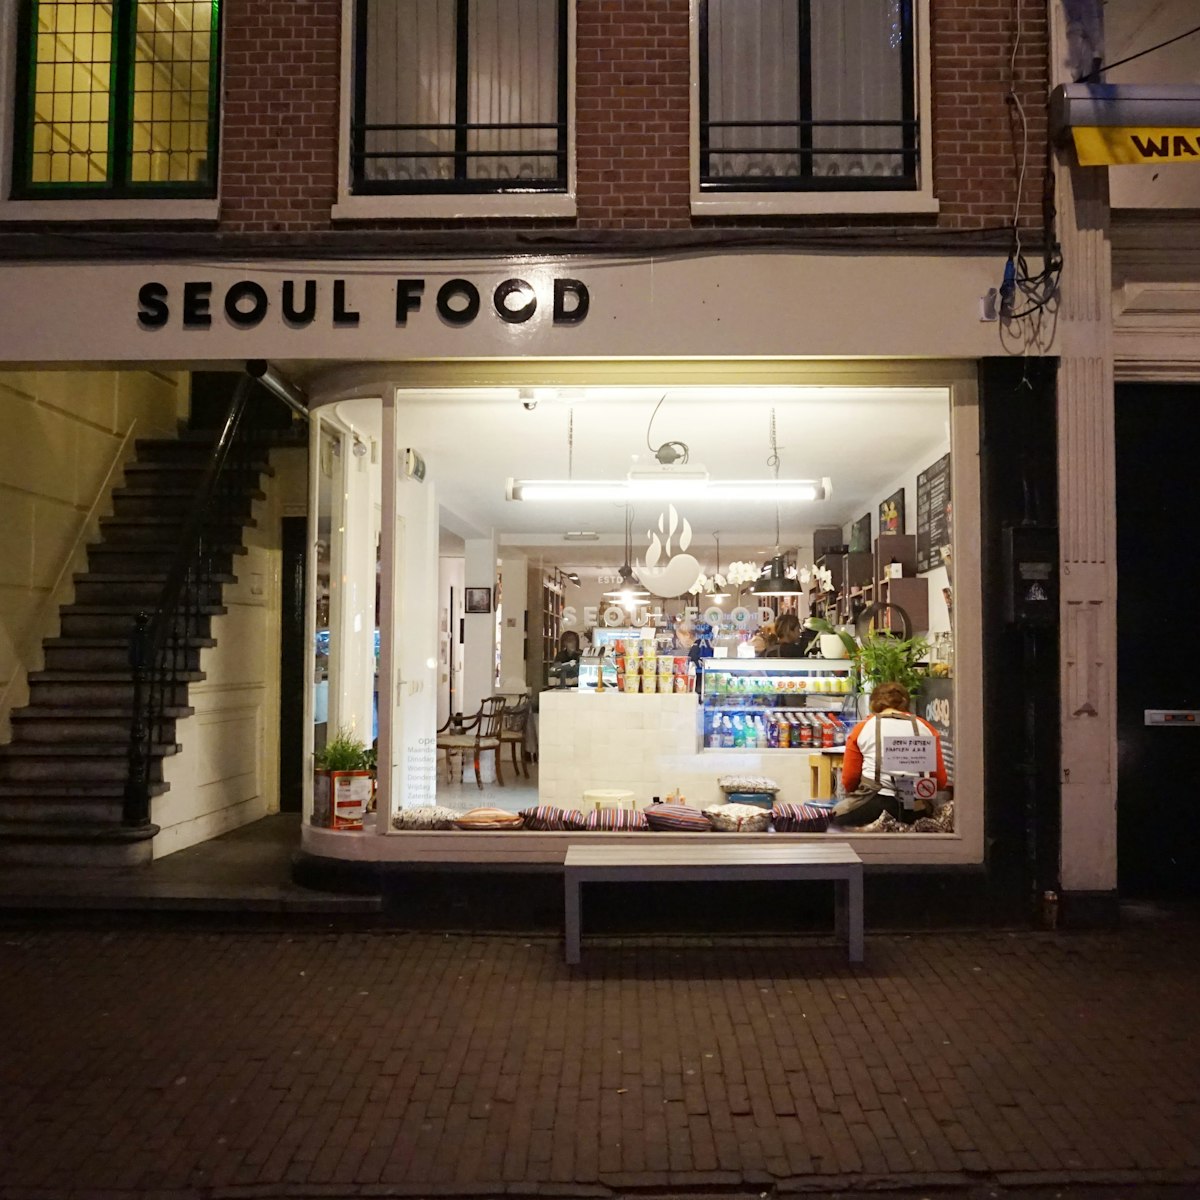 Seoul food is located on the Kinkerstraat